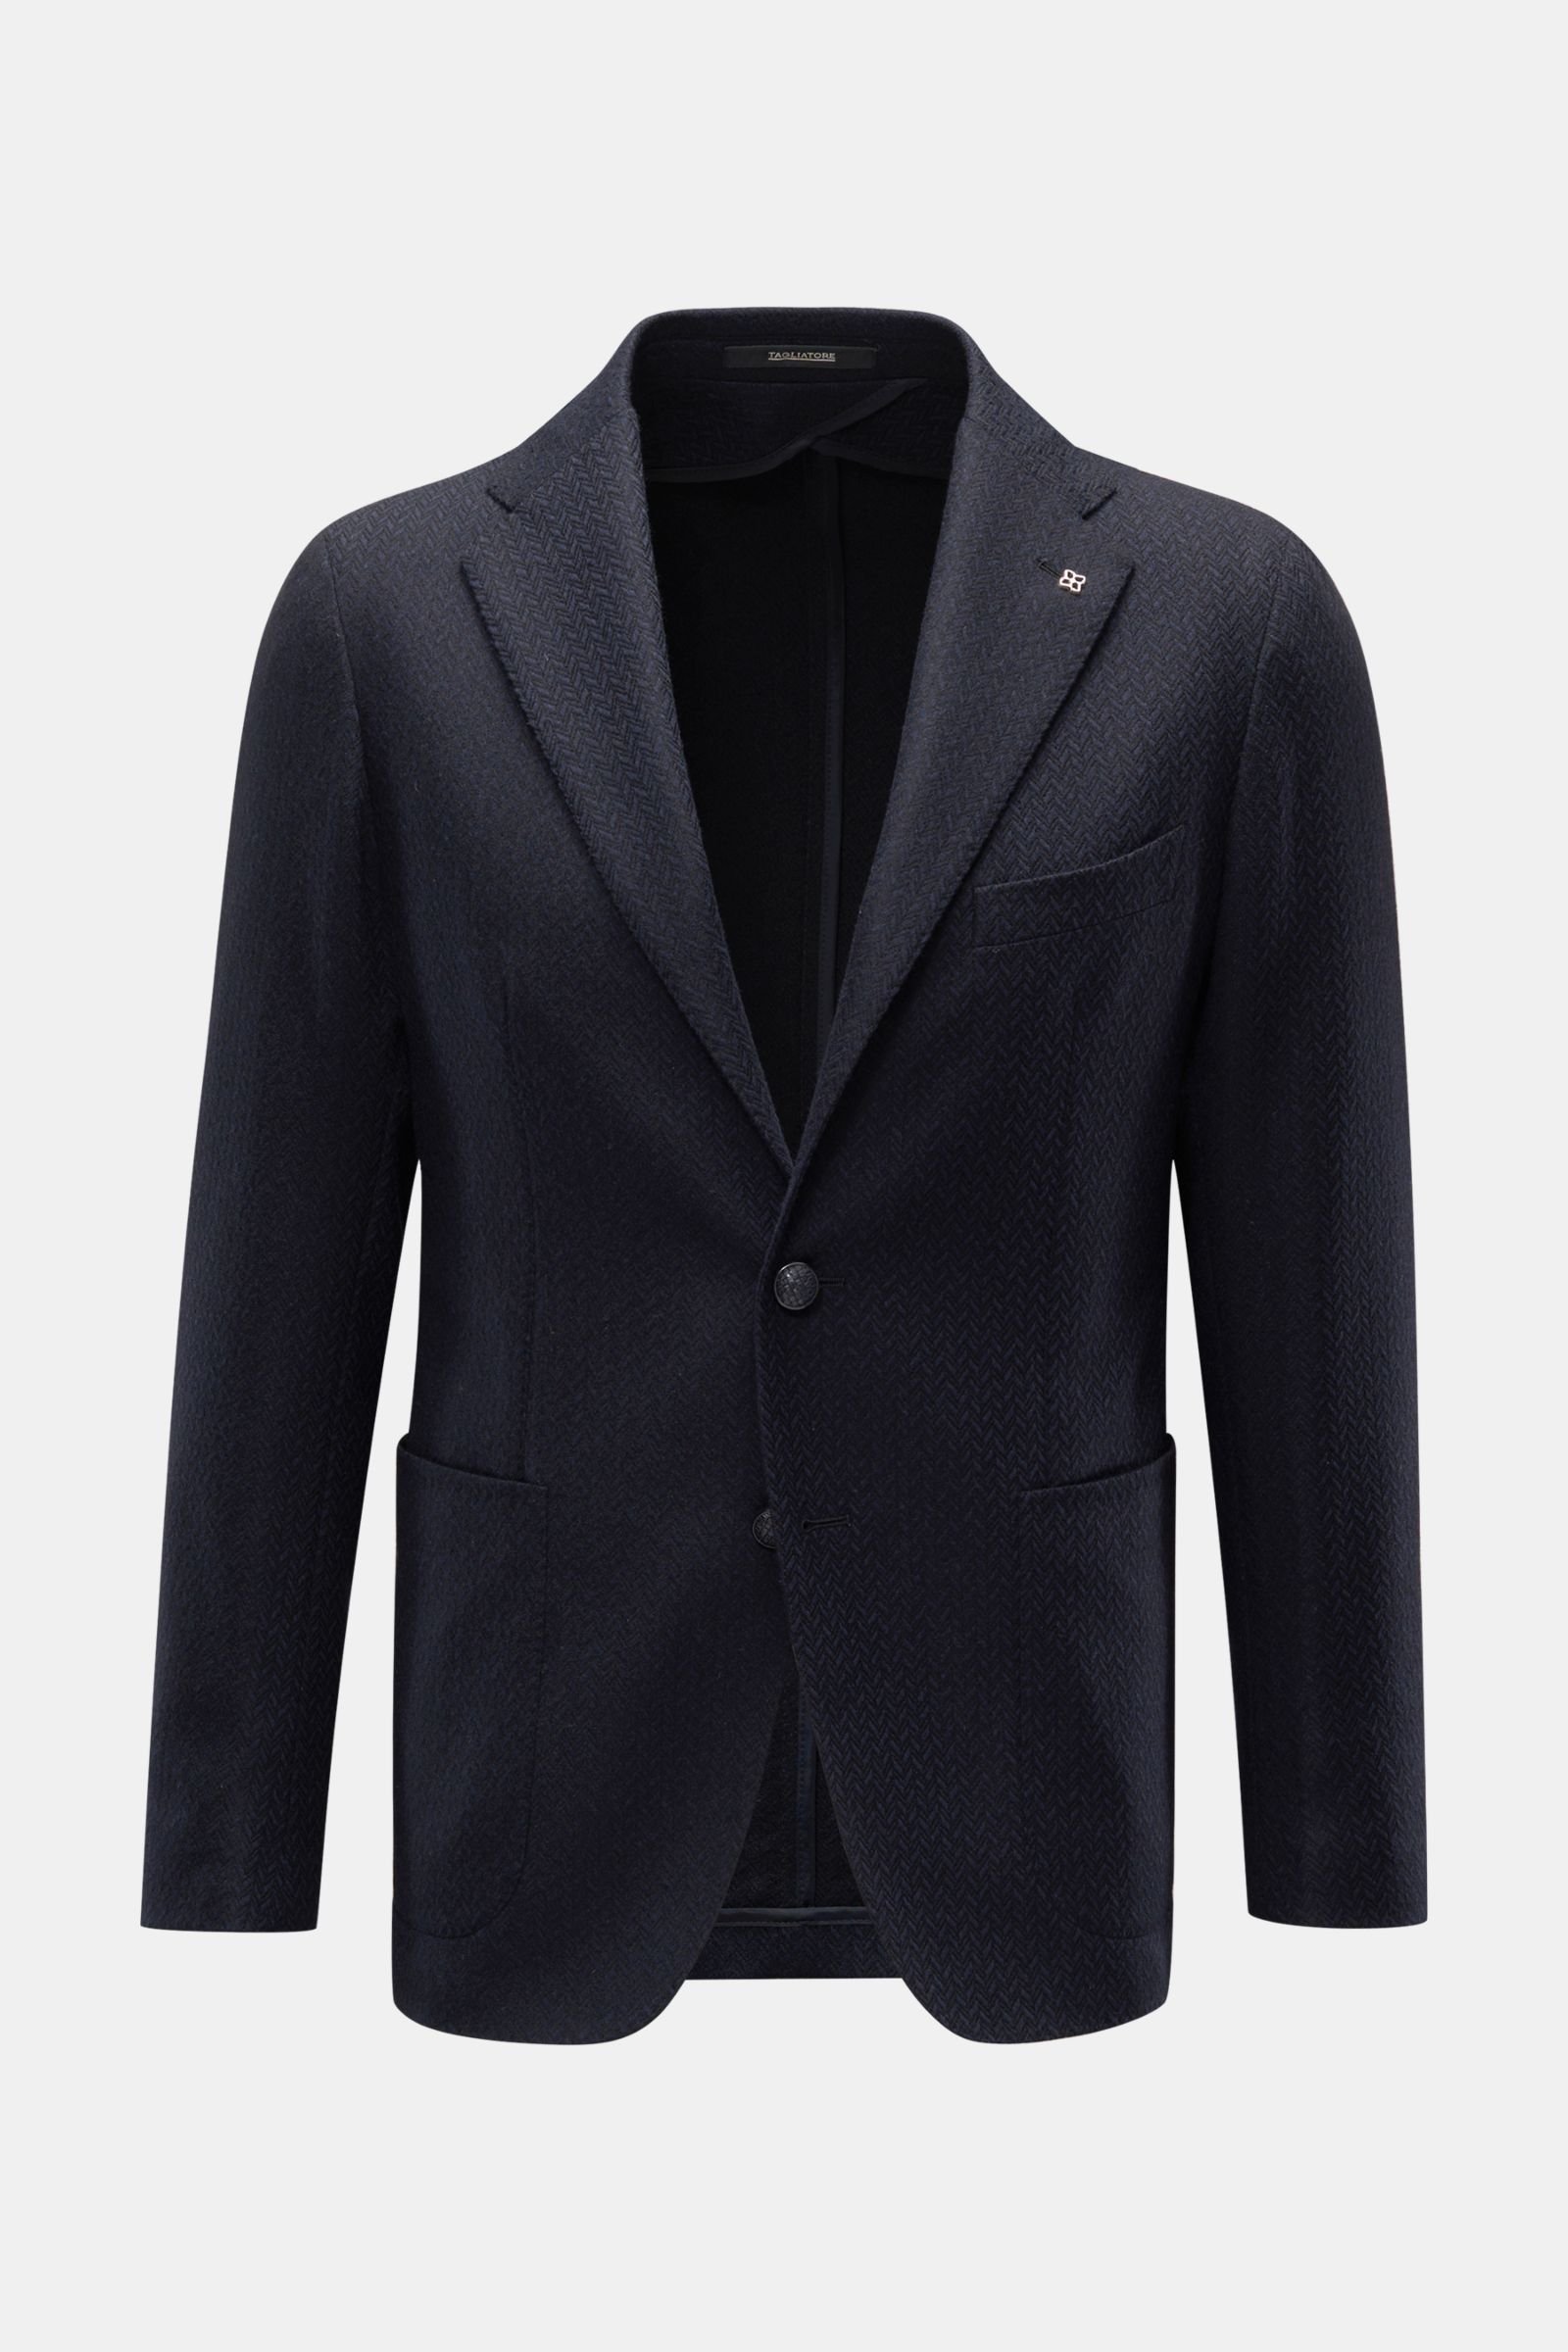 Smart-casual jacket navy/black patterned